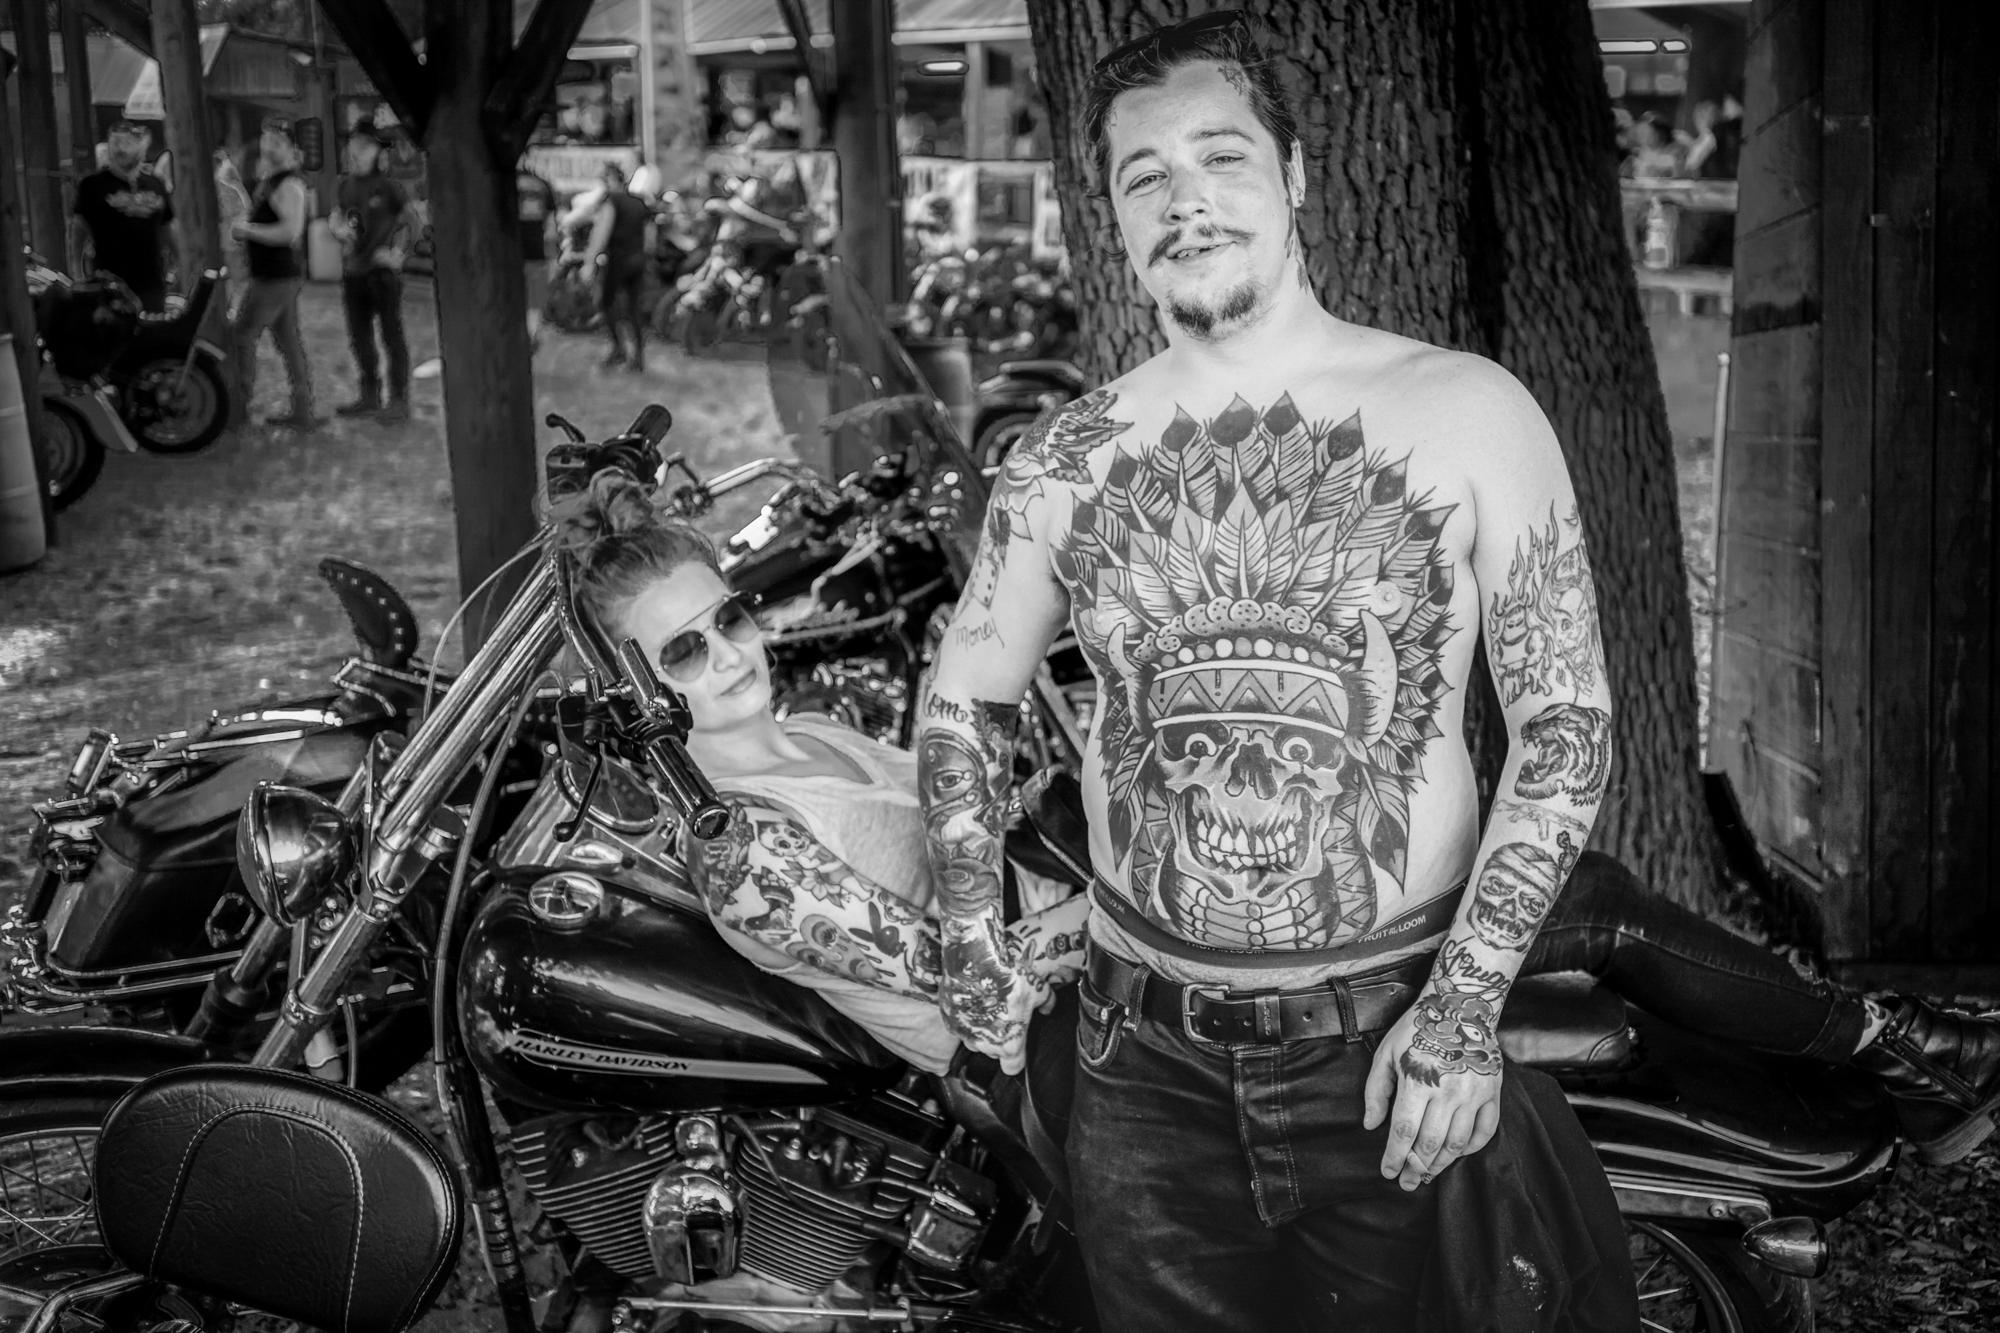 The American Biker - Indian Tattoo, Iron Horse Saloon, Ormond Beach, FL, 2019